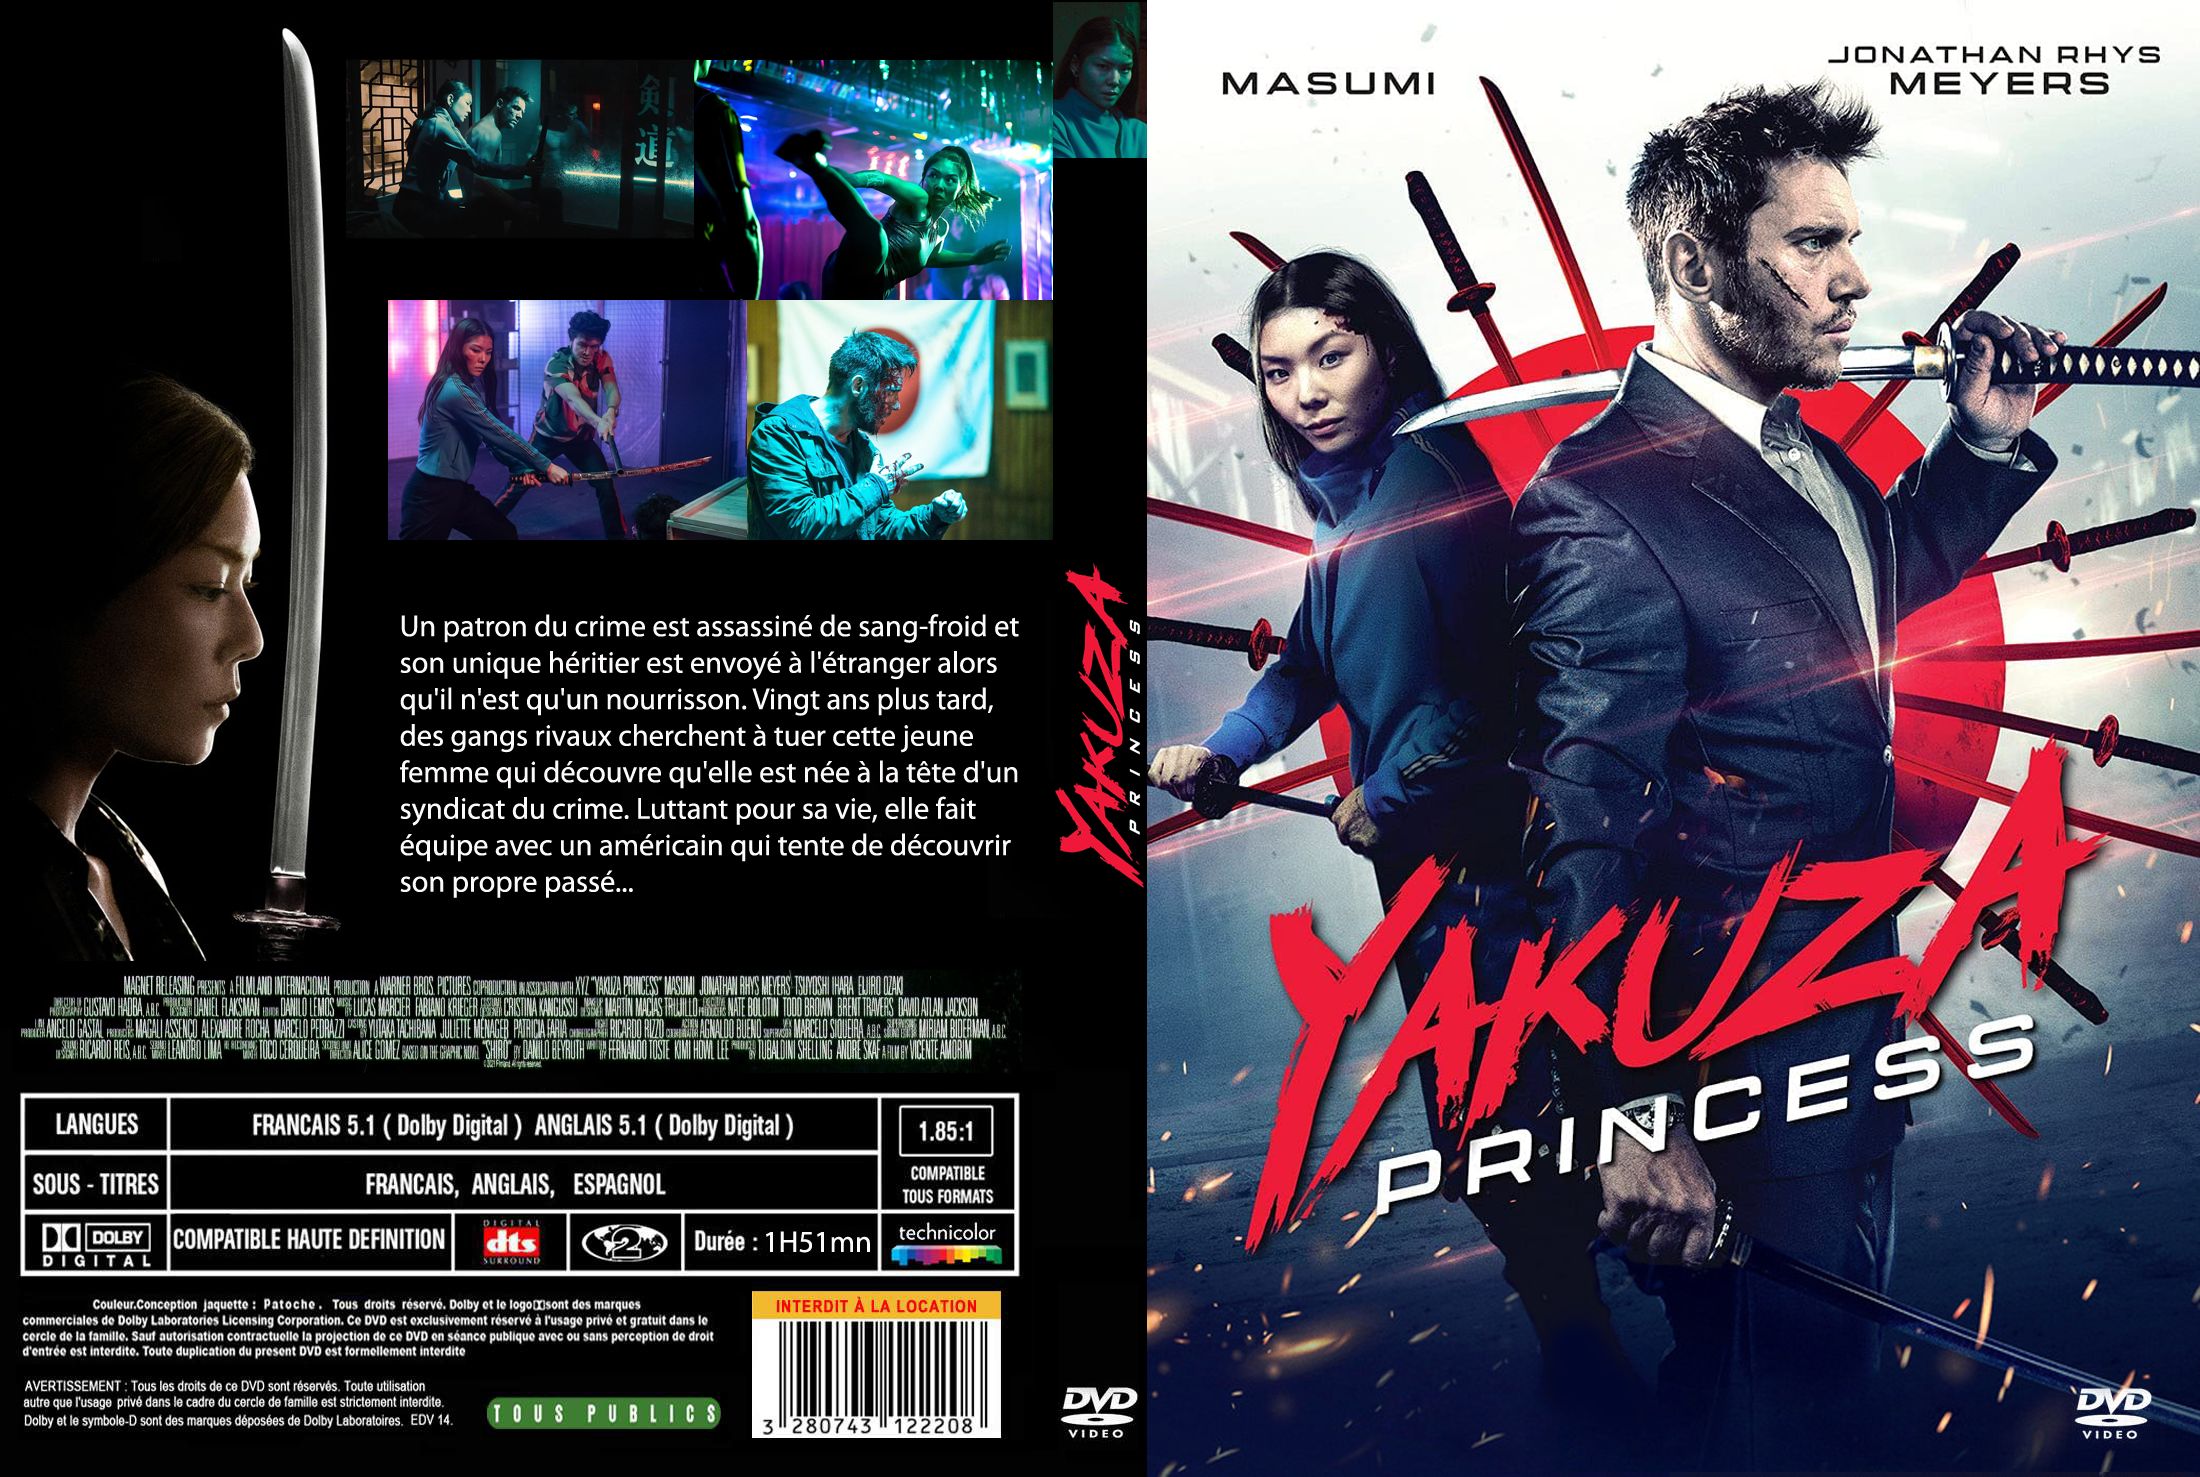 Jaquette DVD Yakuza princess custom